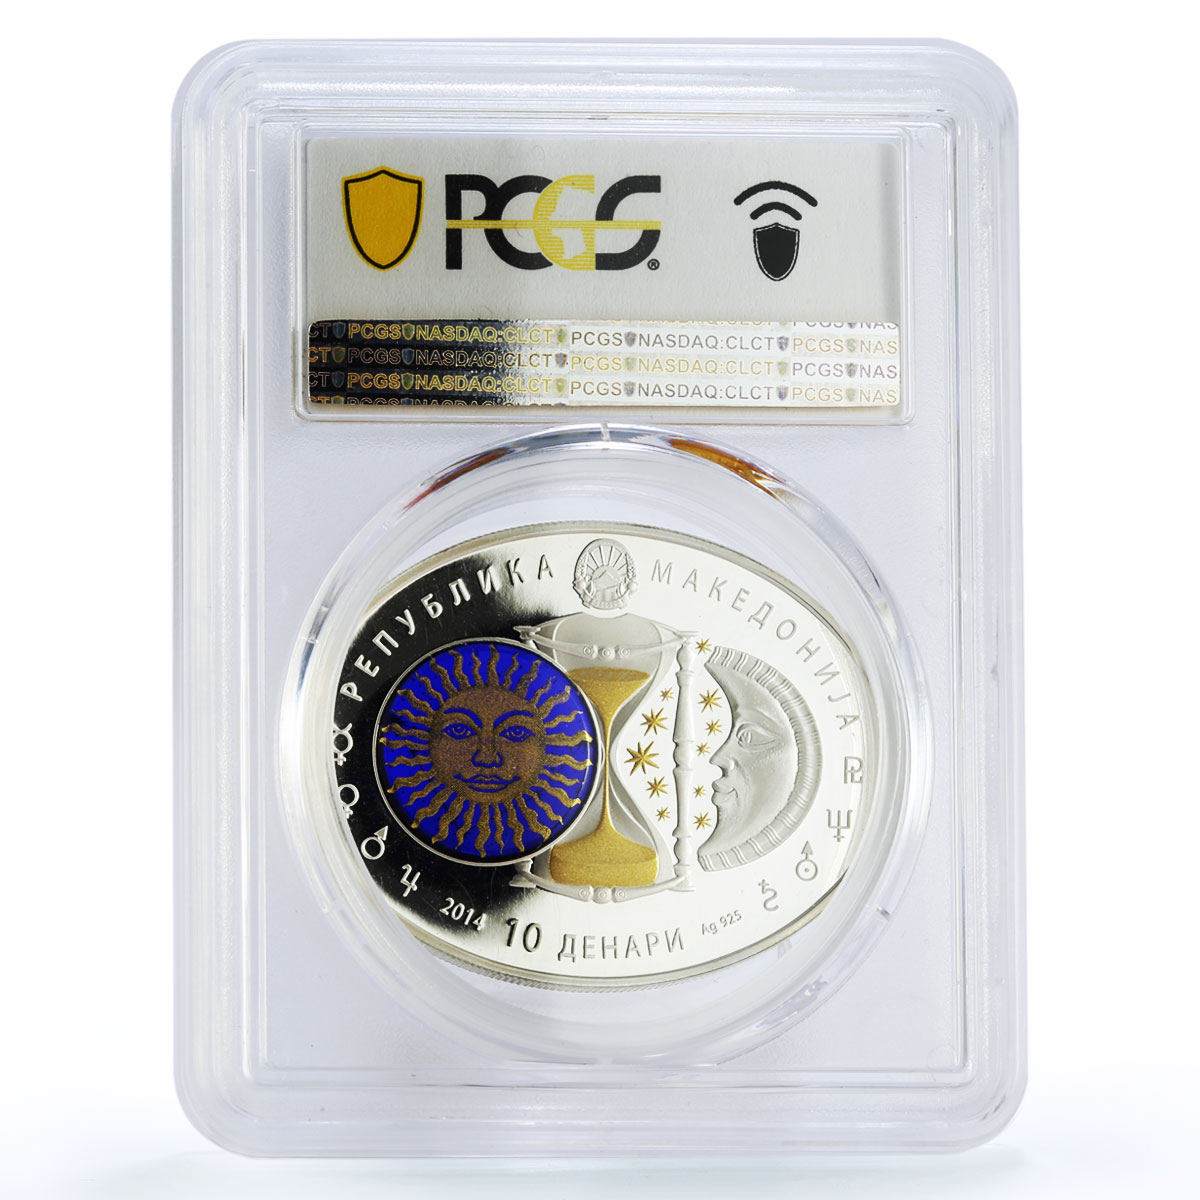 Macedonia 10 denars Zodiac Signs series Capricorn 3D PR68 PCGS silver coin 2014